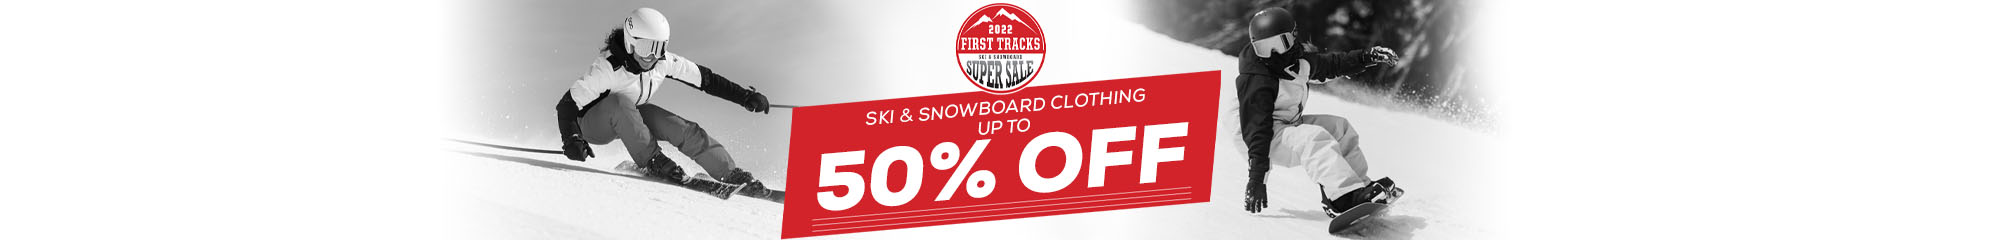 Snowboard Clothing Deals
